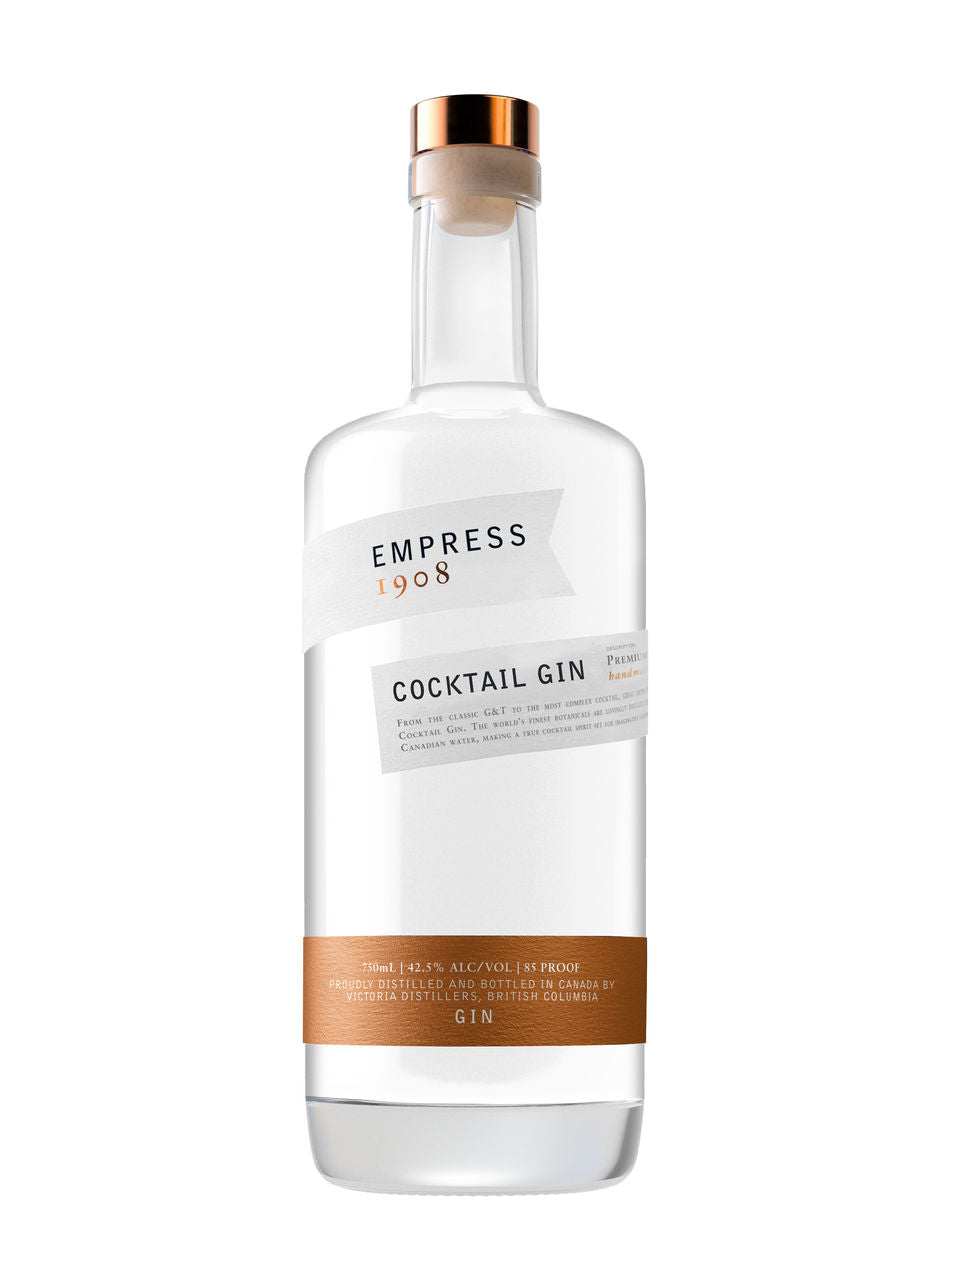 Empress Cocktail Gin 750 ml bottle